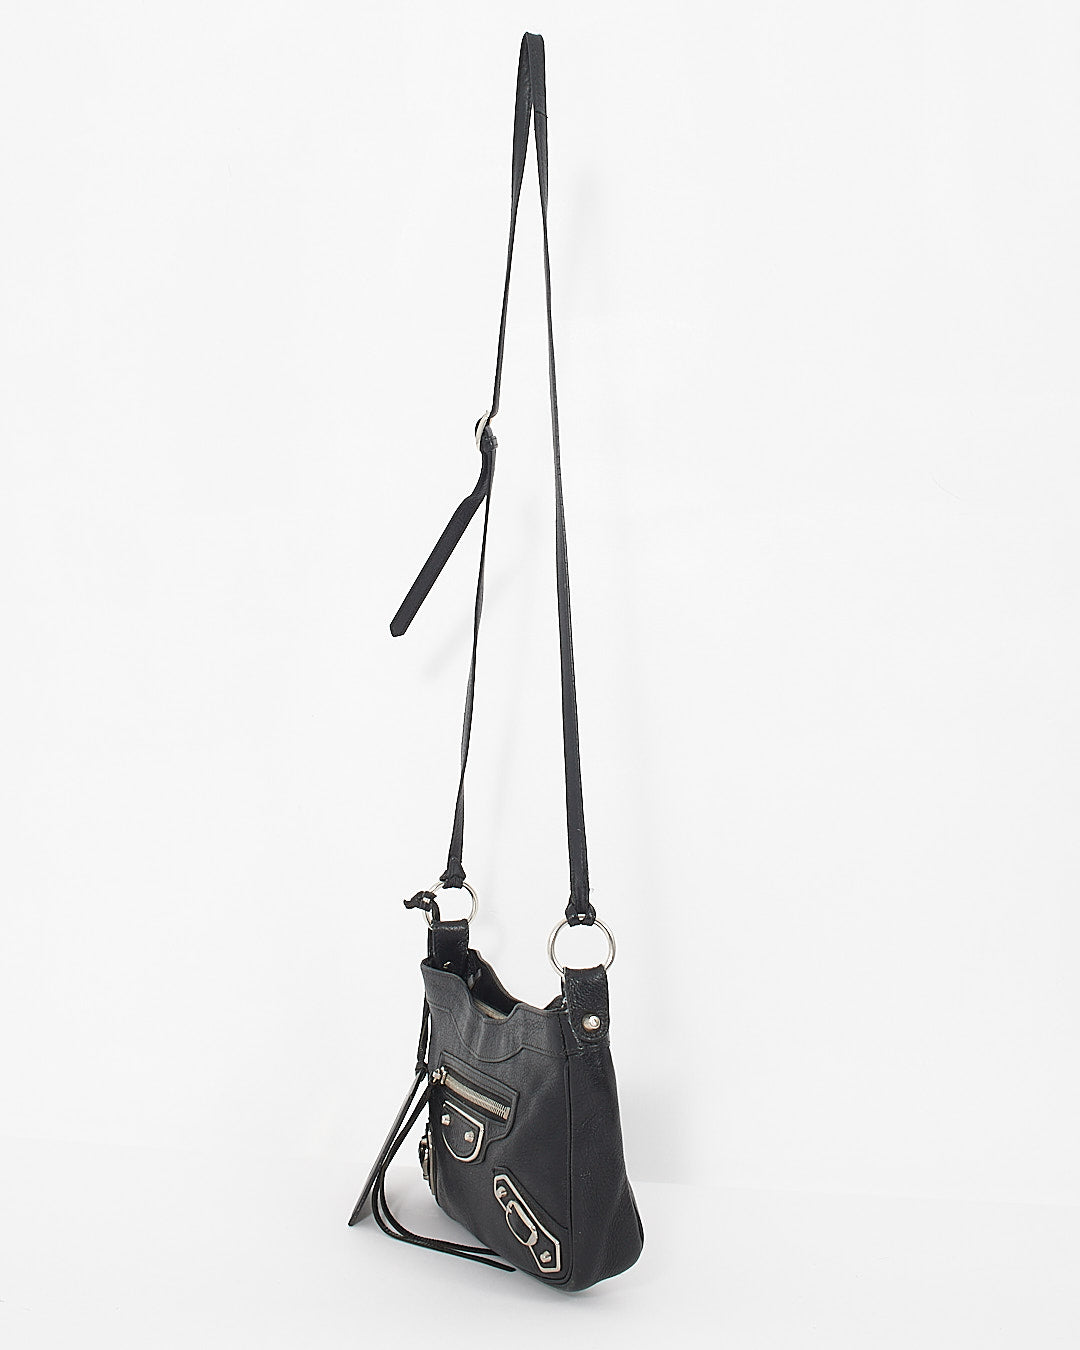 Balenciaga Sac bandoulière noir à bords métallisés